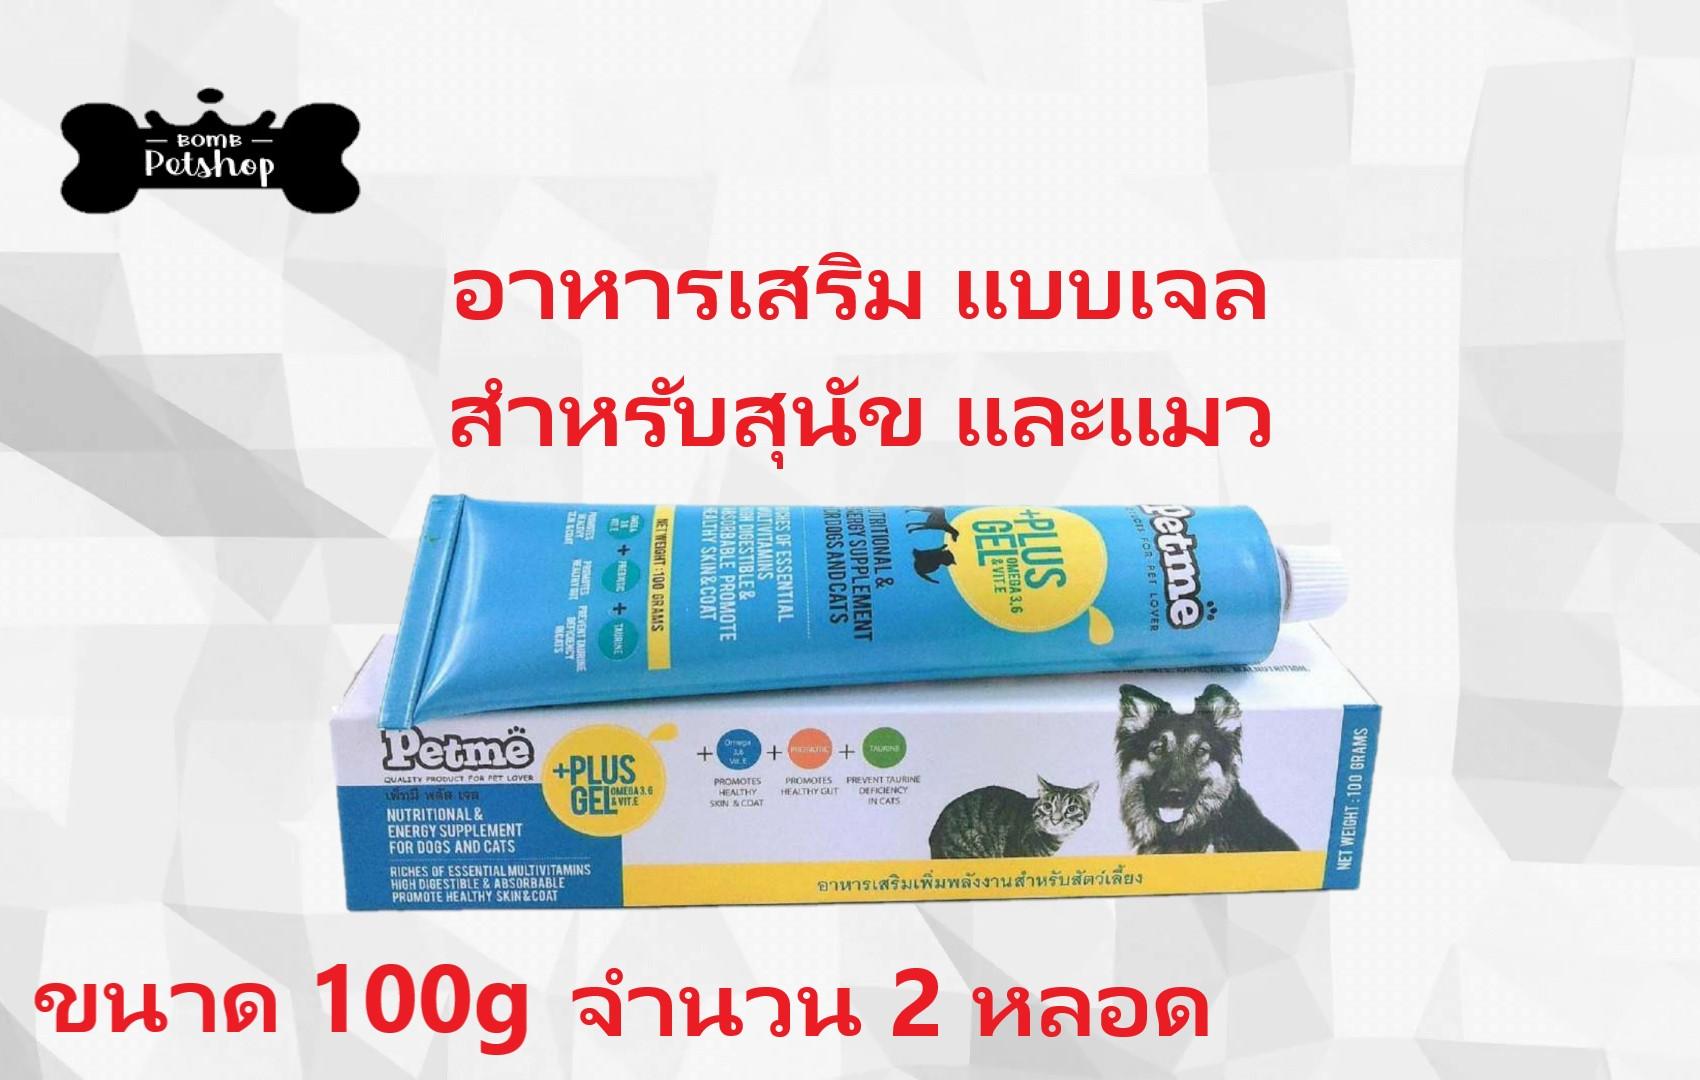 Petme Plus Gel Supplement Dogs Cats อาหารเสริม เหลวในหลอด สัตว์เลี้ยง สุนัข แมว ชนิดเจล ขนาด 100g x 2 หลอด